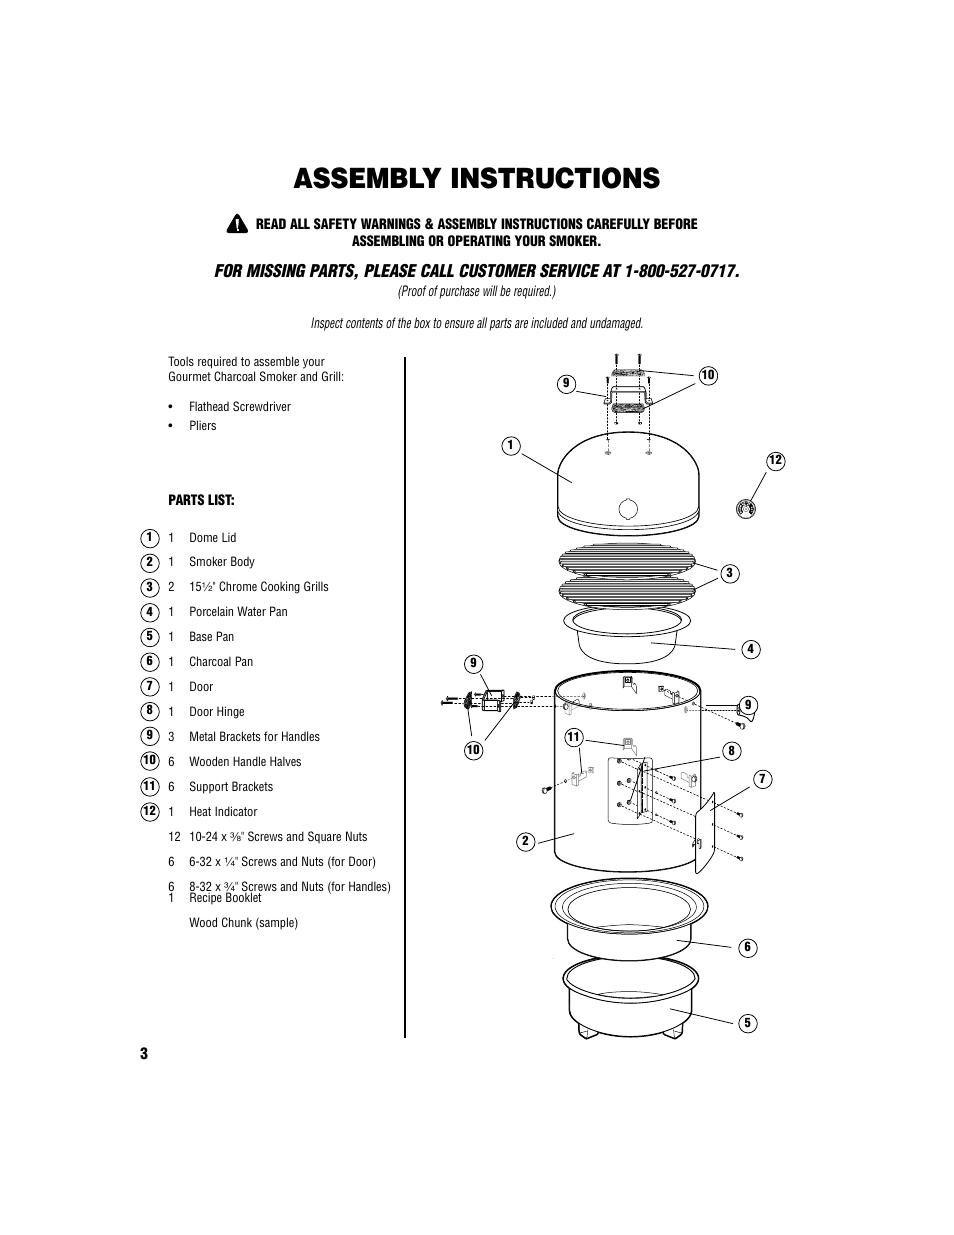 Assembly instructions | Brinkmann Smoker User Manual | Page 4 / 12